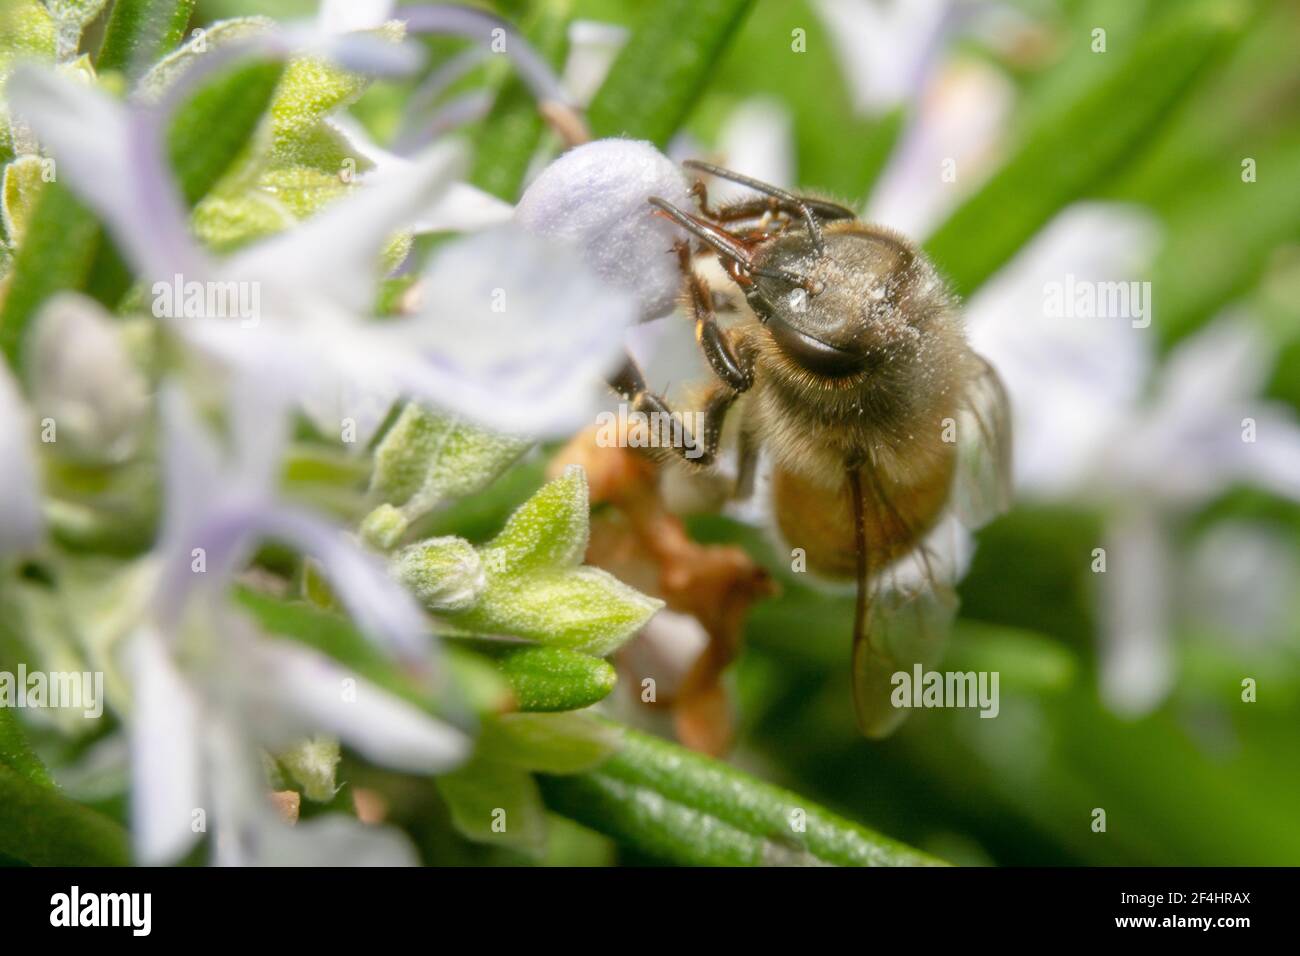 Abeja de miel bebiendo néctar de una flor blanca Foto de stock